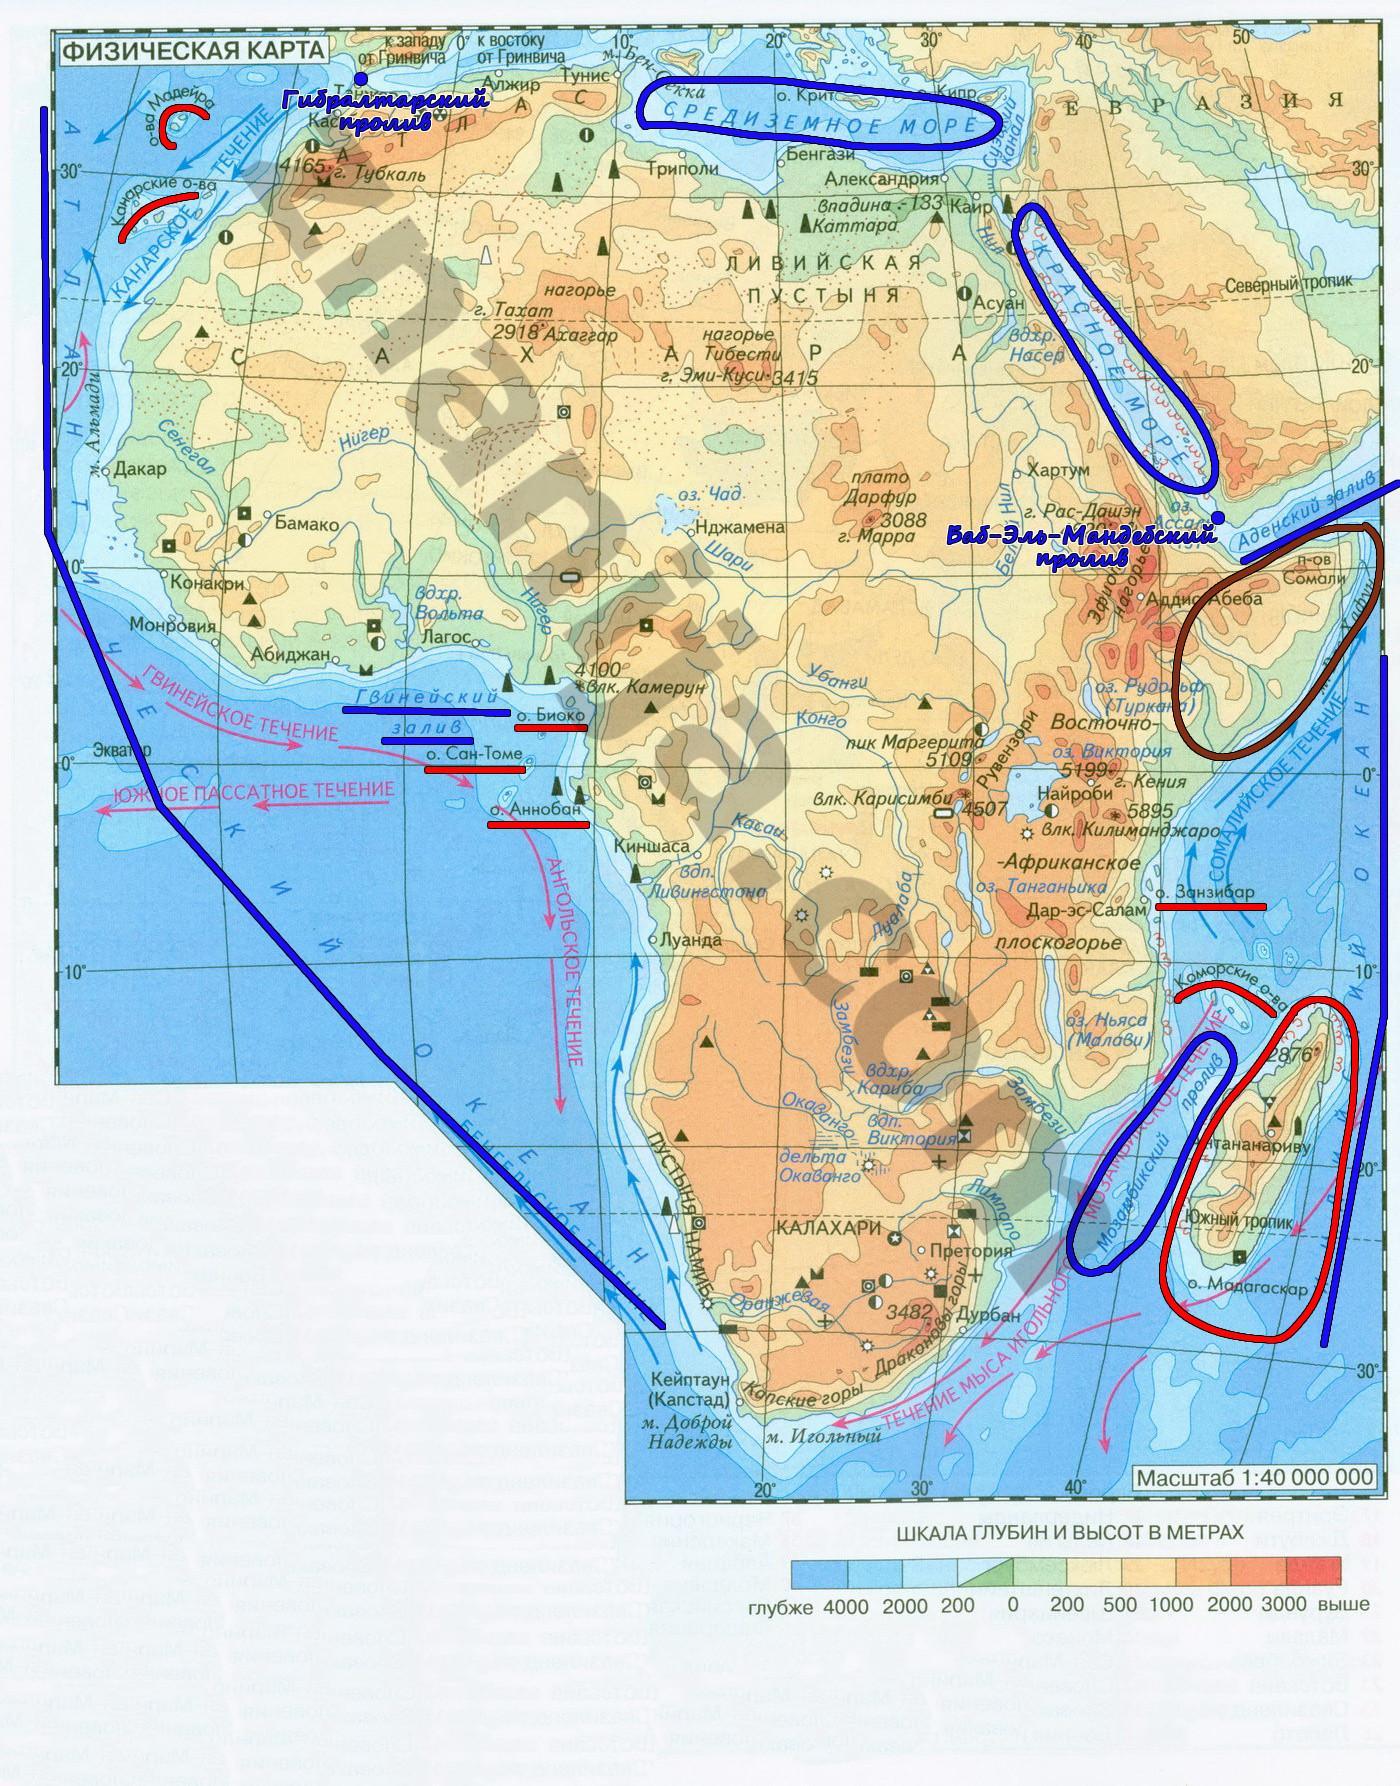 Африка береговая линия моря. Африка заливы и проливы на карте. Карта Африки океаны моря заливы проливы. Африка заливы проливы острова полуострова. Заливы и проливы и острова и полуострова Африки на карте.